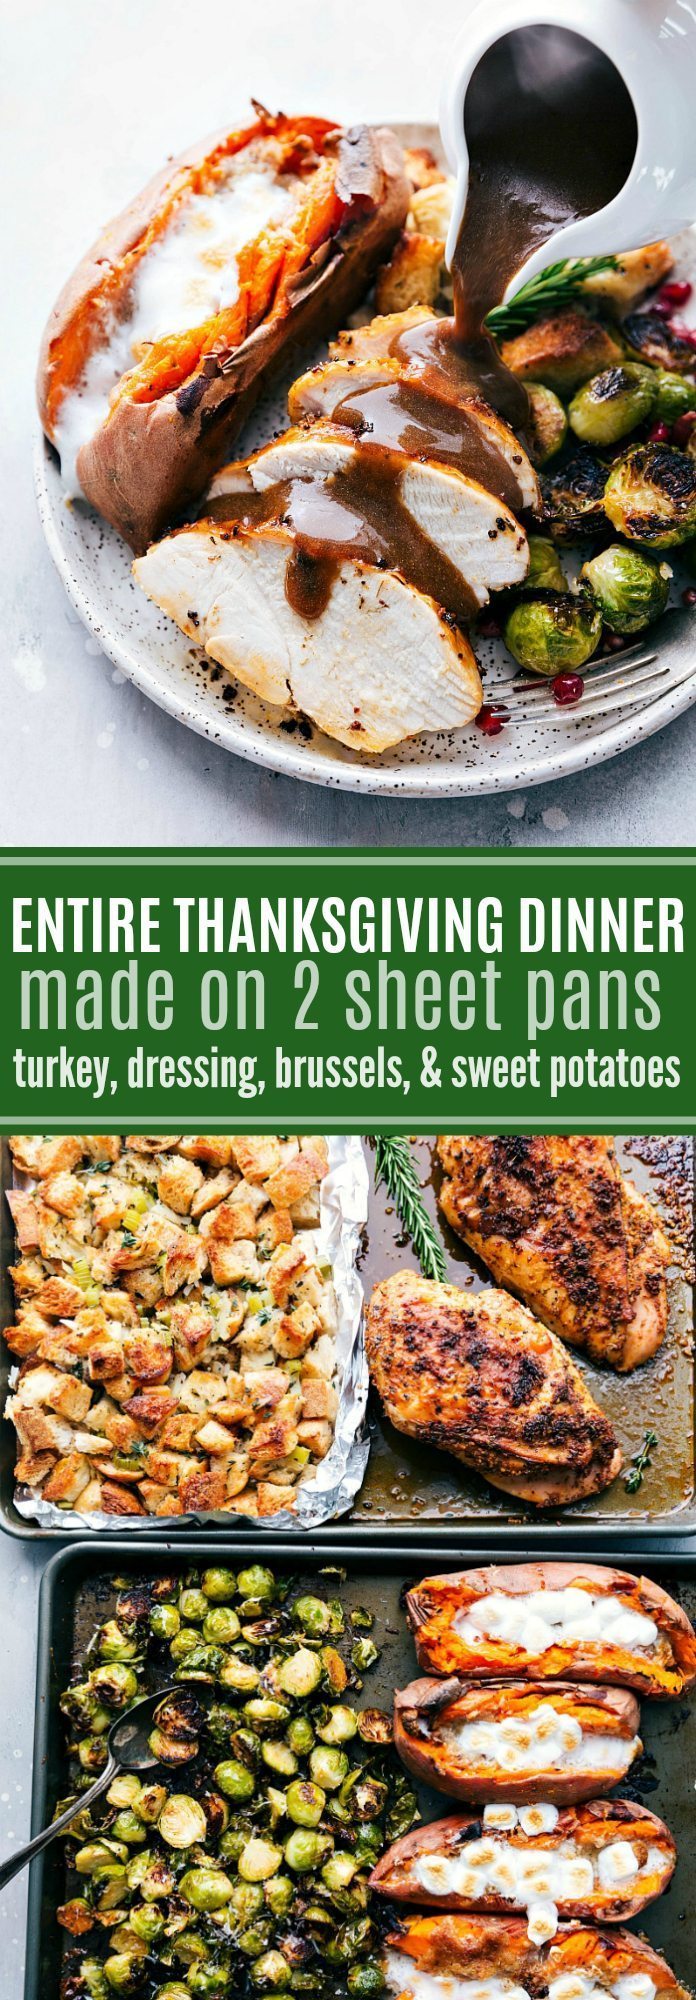 Thanksgiving Dinner on 2 Sheet Pans - Chelsea's Messy Apron